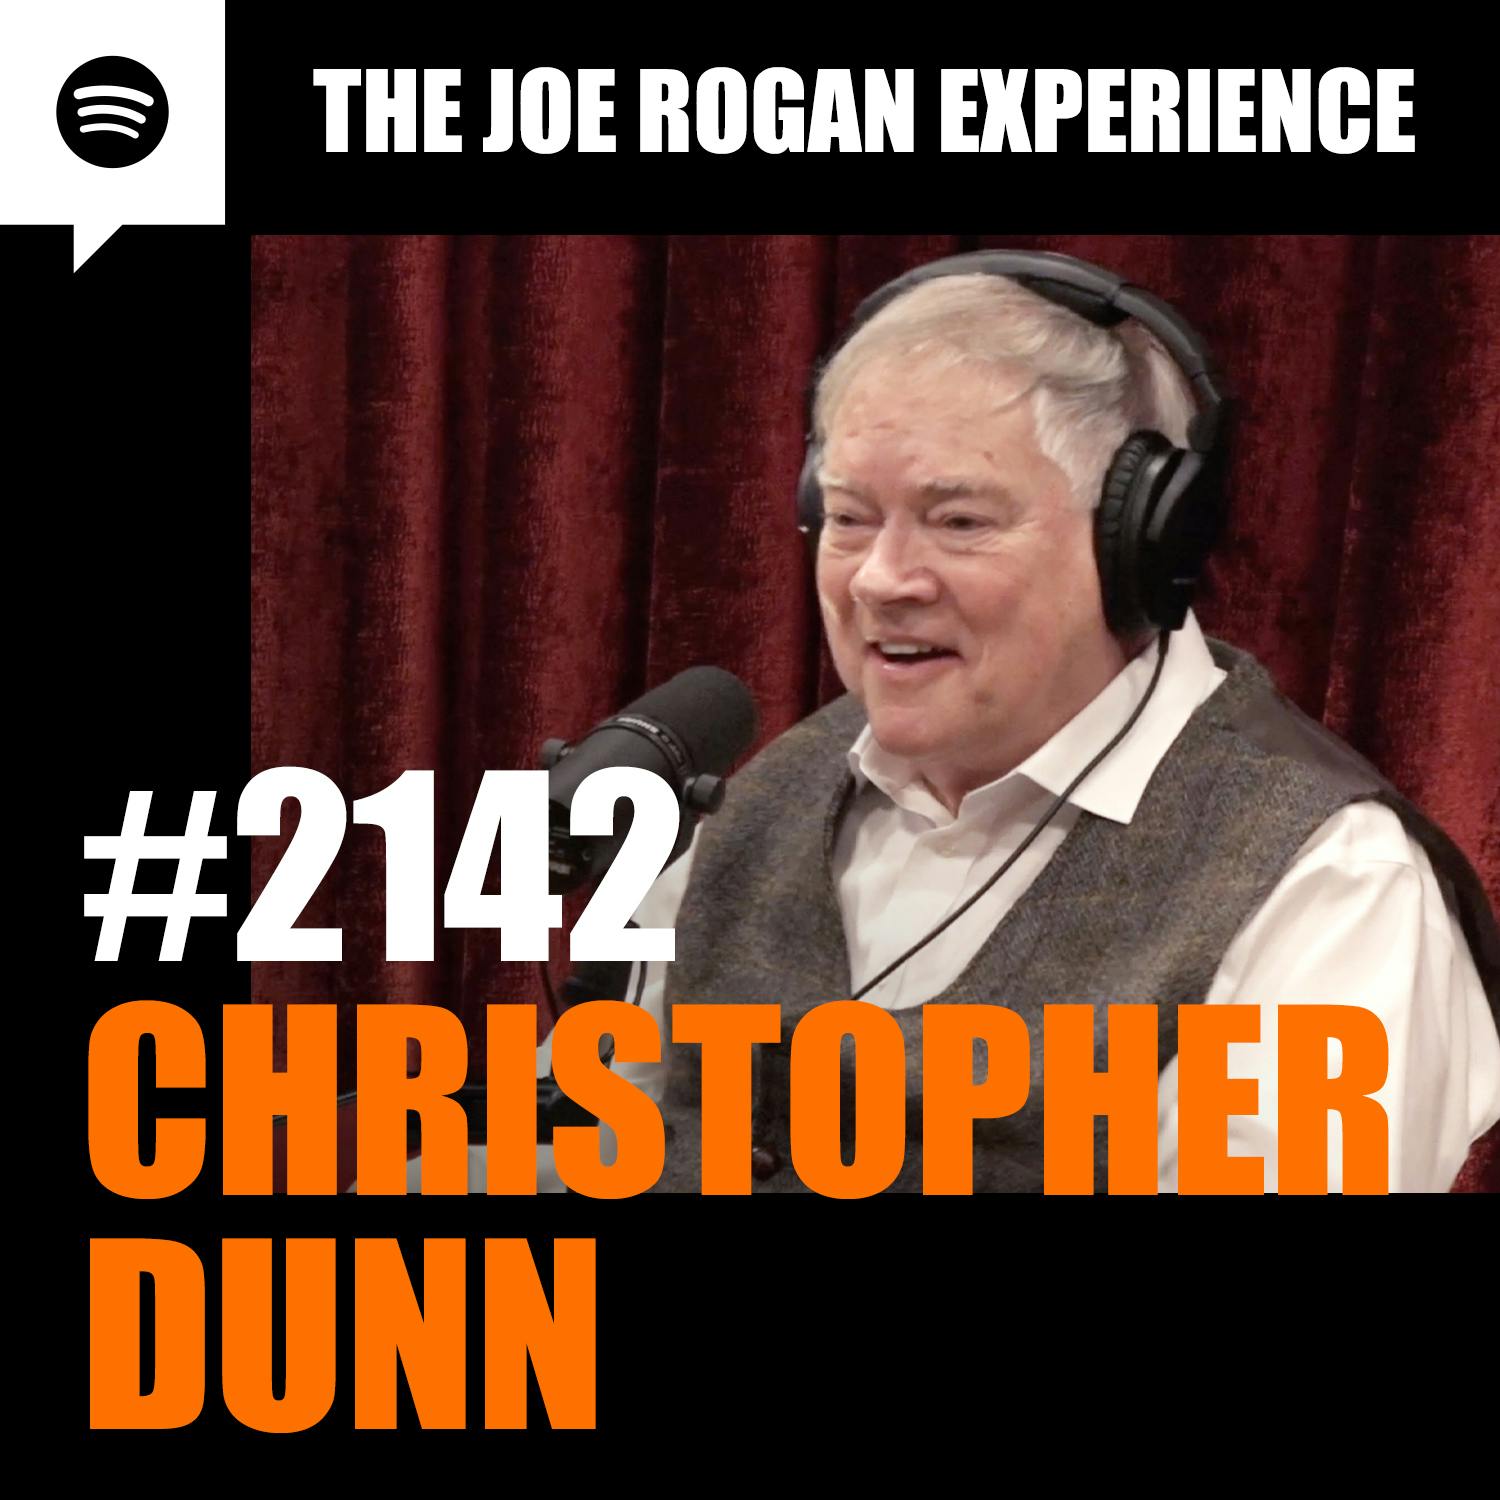 #2142 - Christopher Dunn